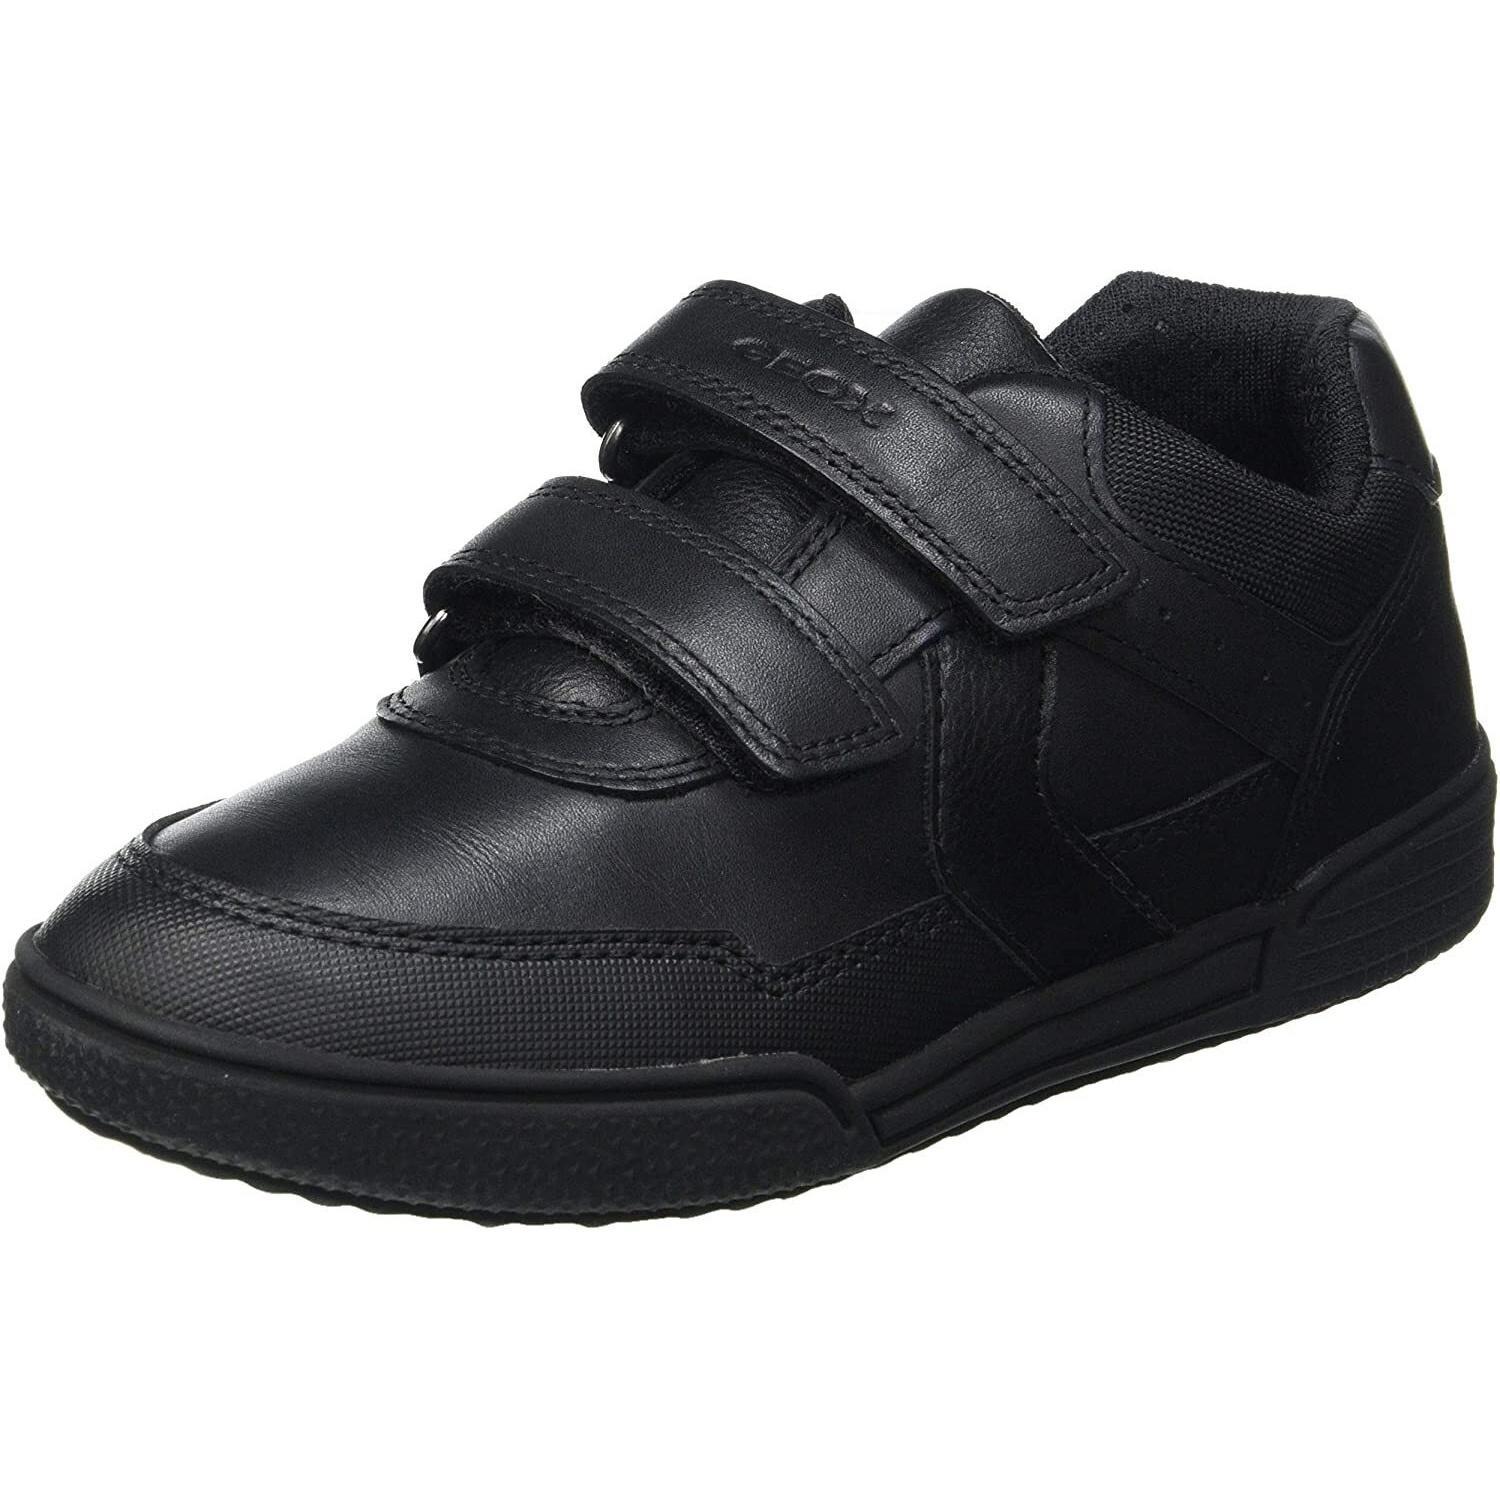 Geox Boys Poseido Leather School Shoes (Black) (11 UK Child)